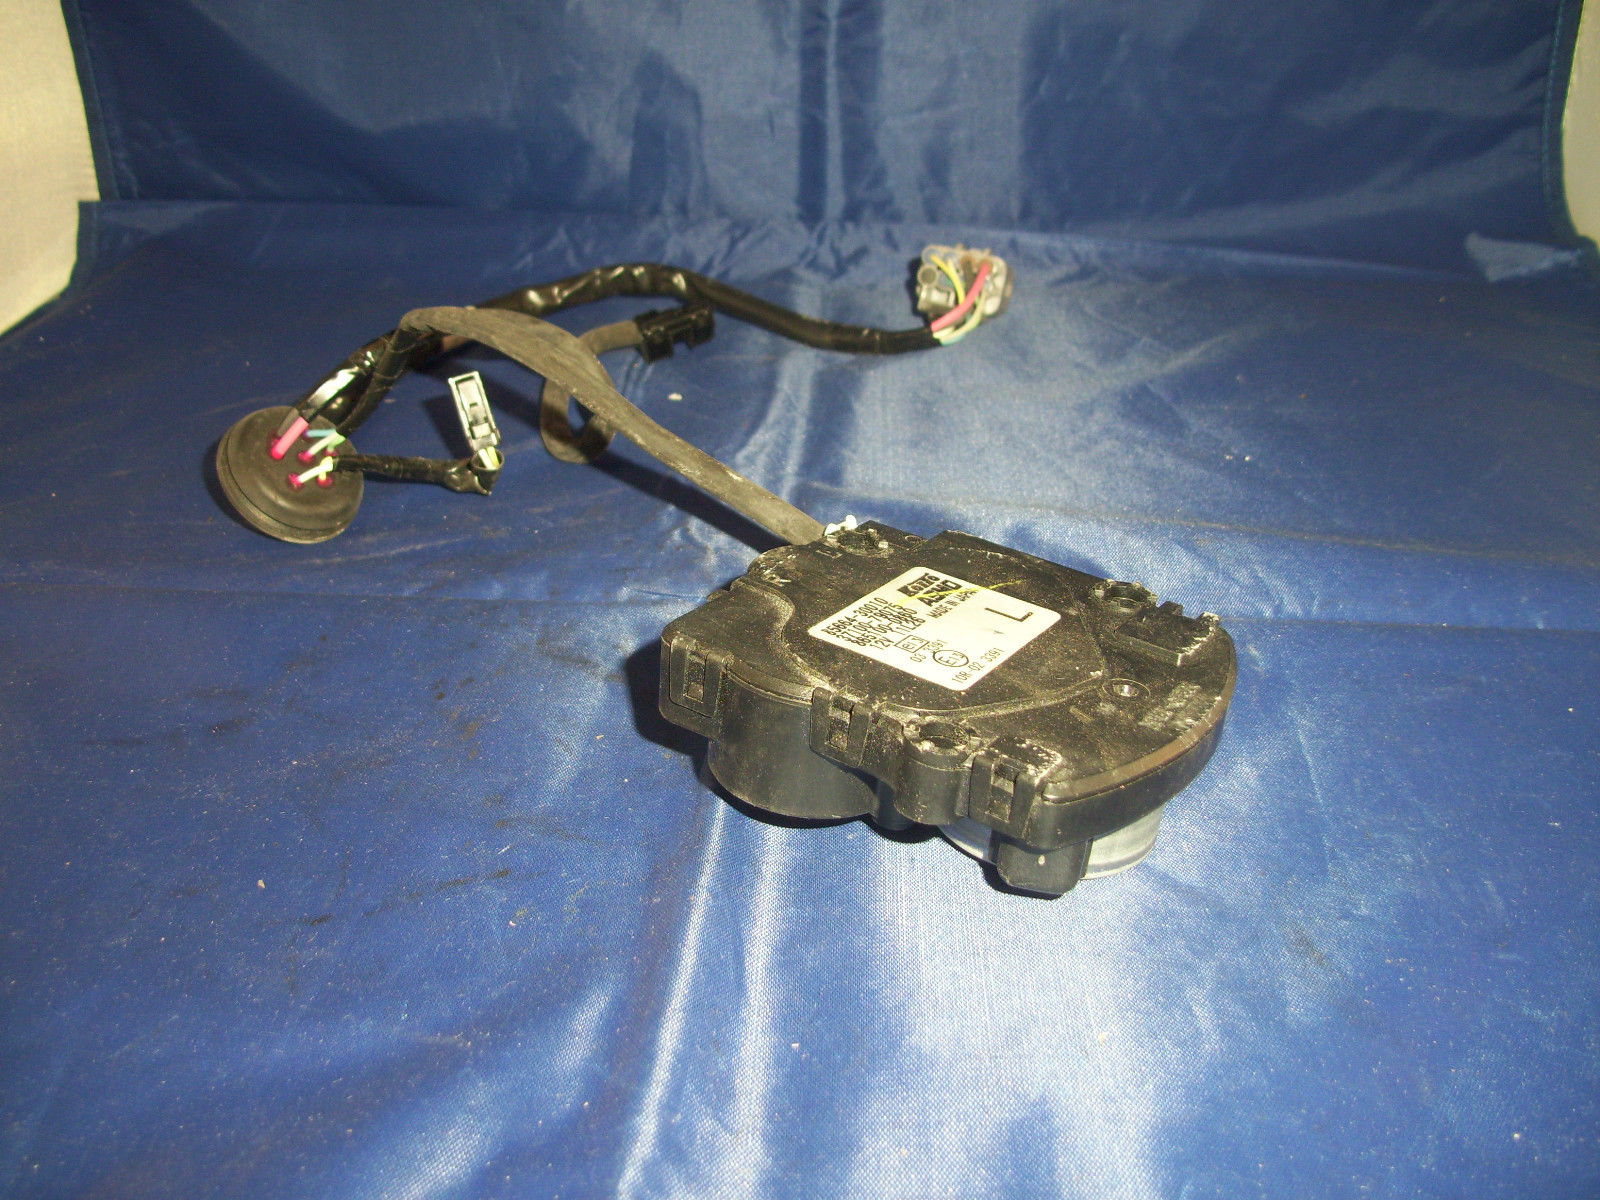 Lexus RX350 Xenon Headlight AFS Motor LH Left 85664-30010, for parts